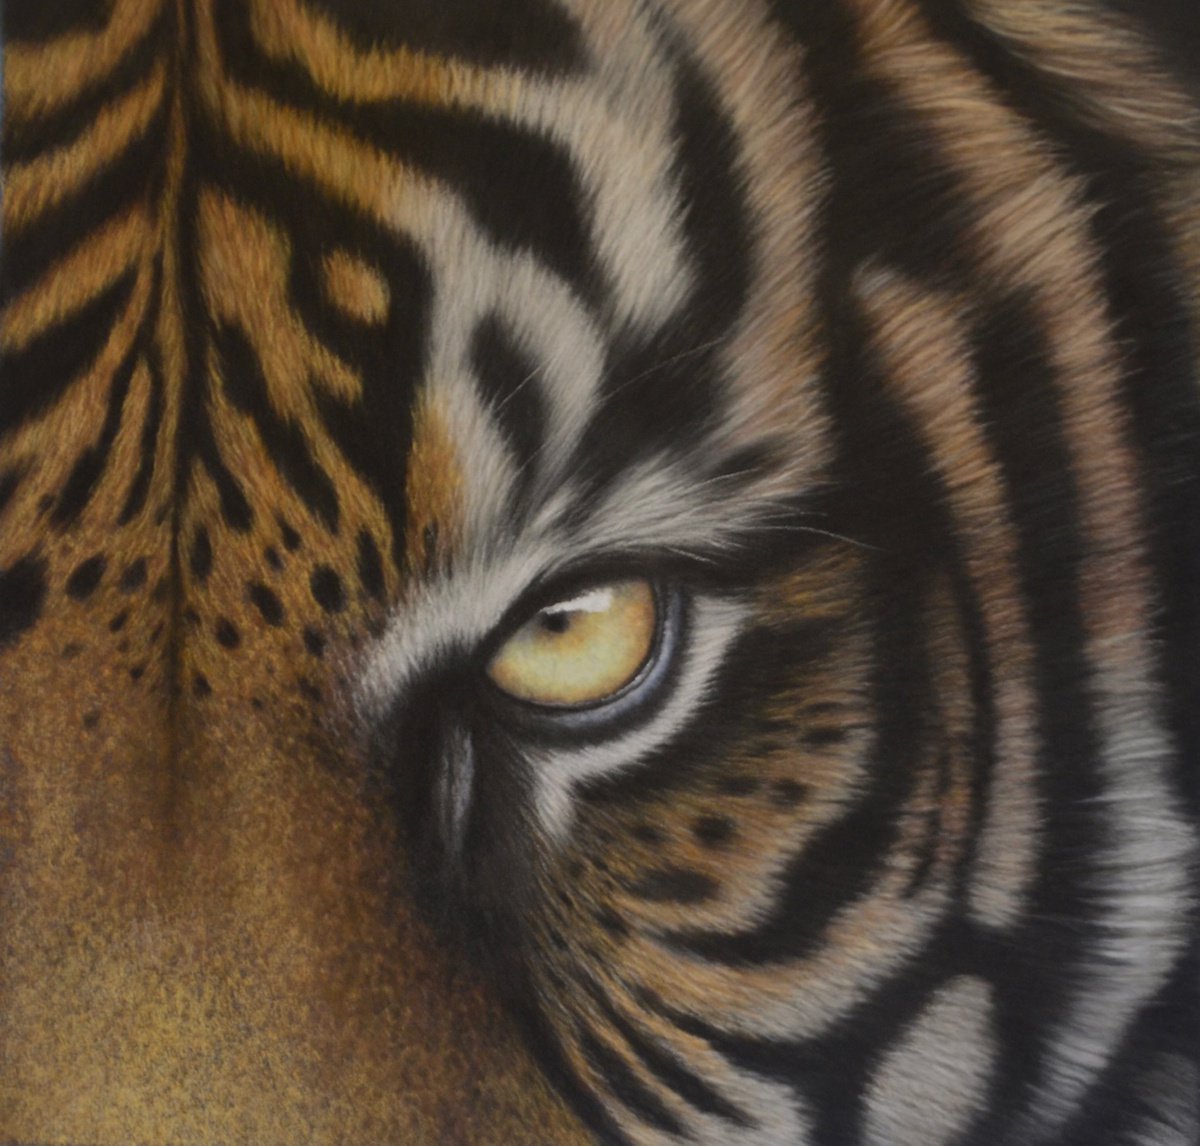 Eye of the Tiger by Debra Spence